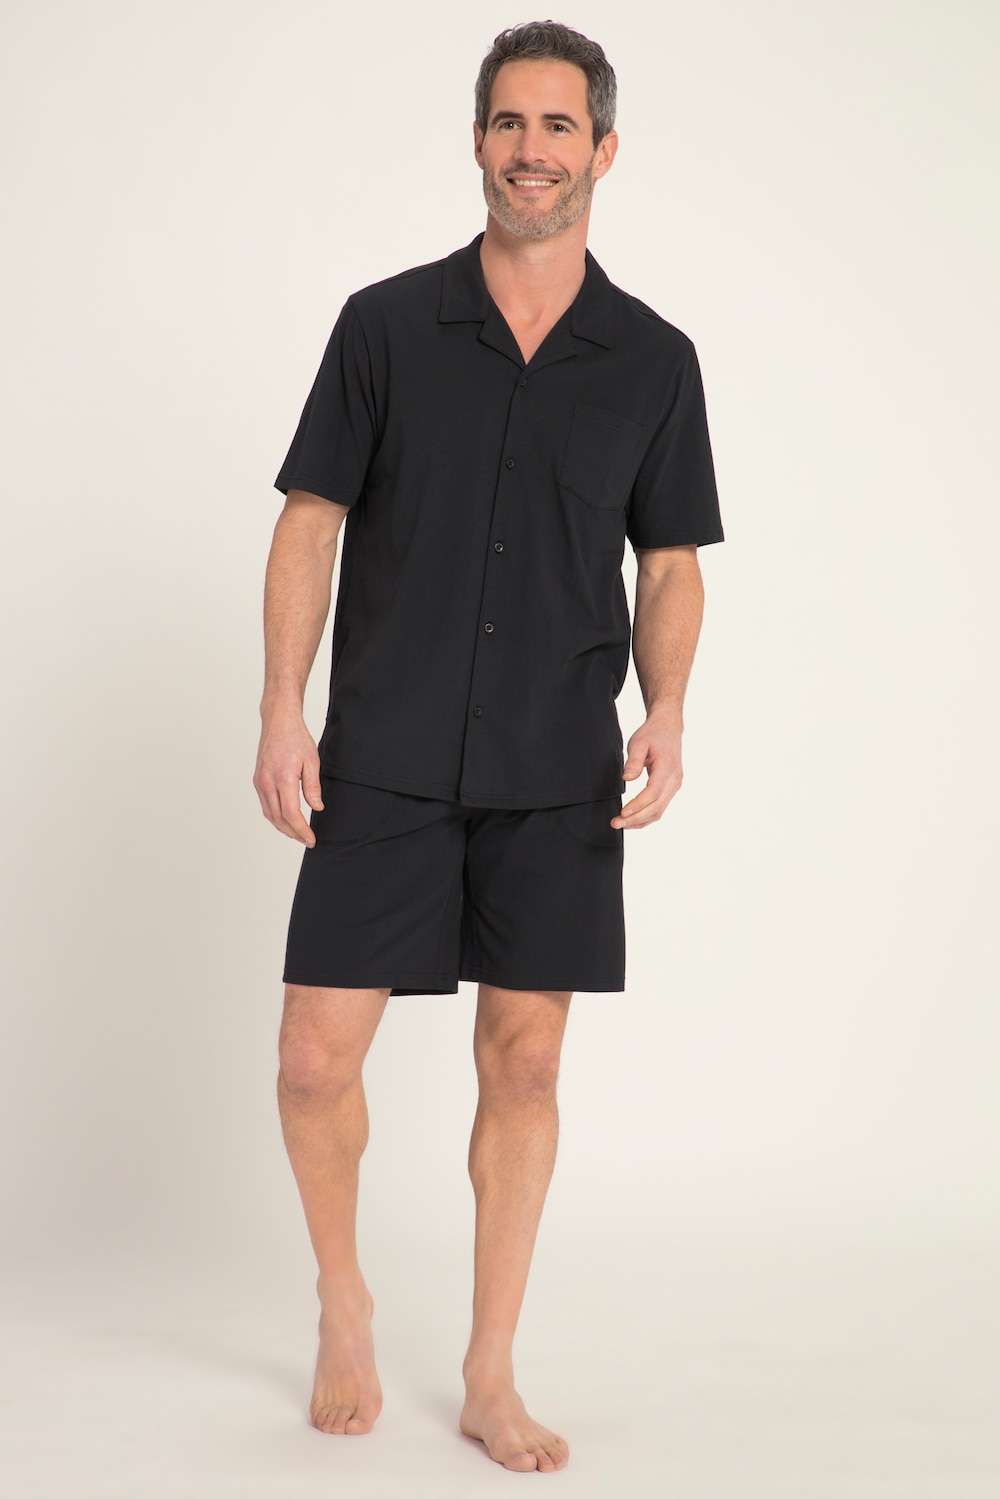 Schlafanzug, Homewear, Oberteil Cuba Kragen, Shorts